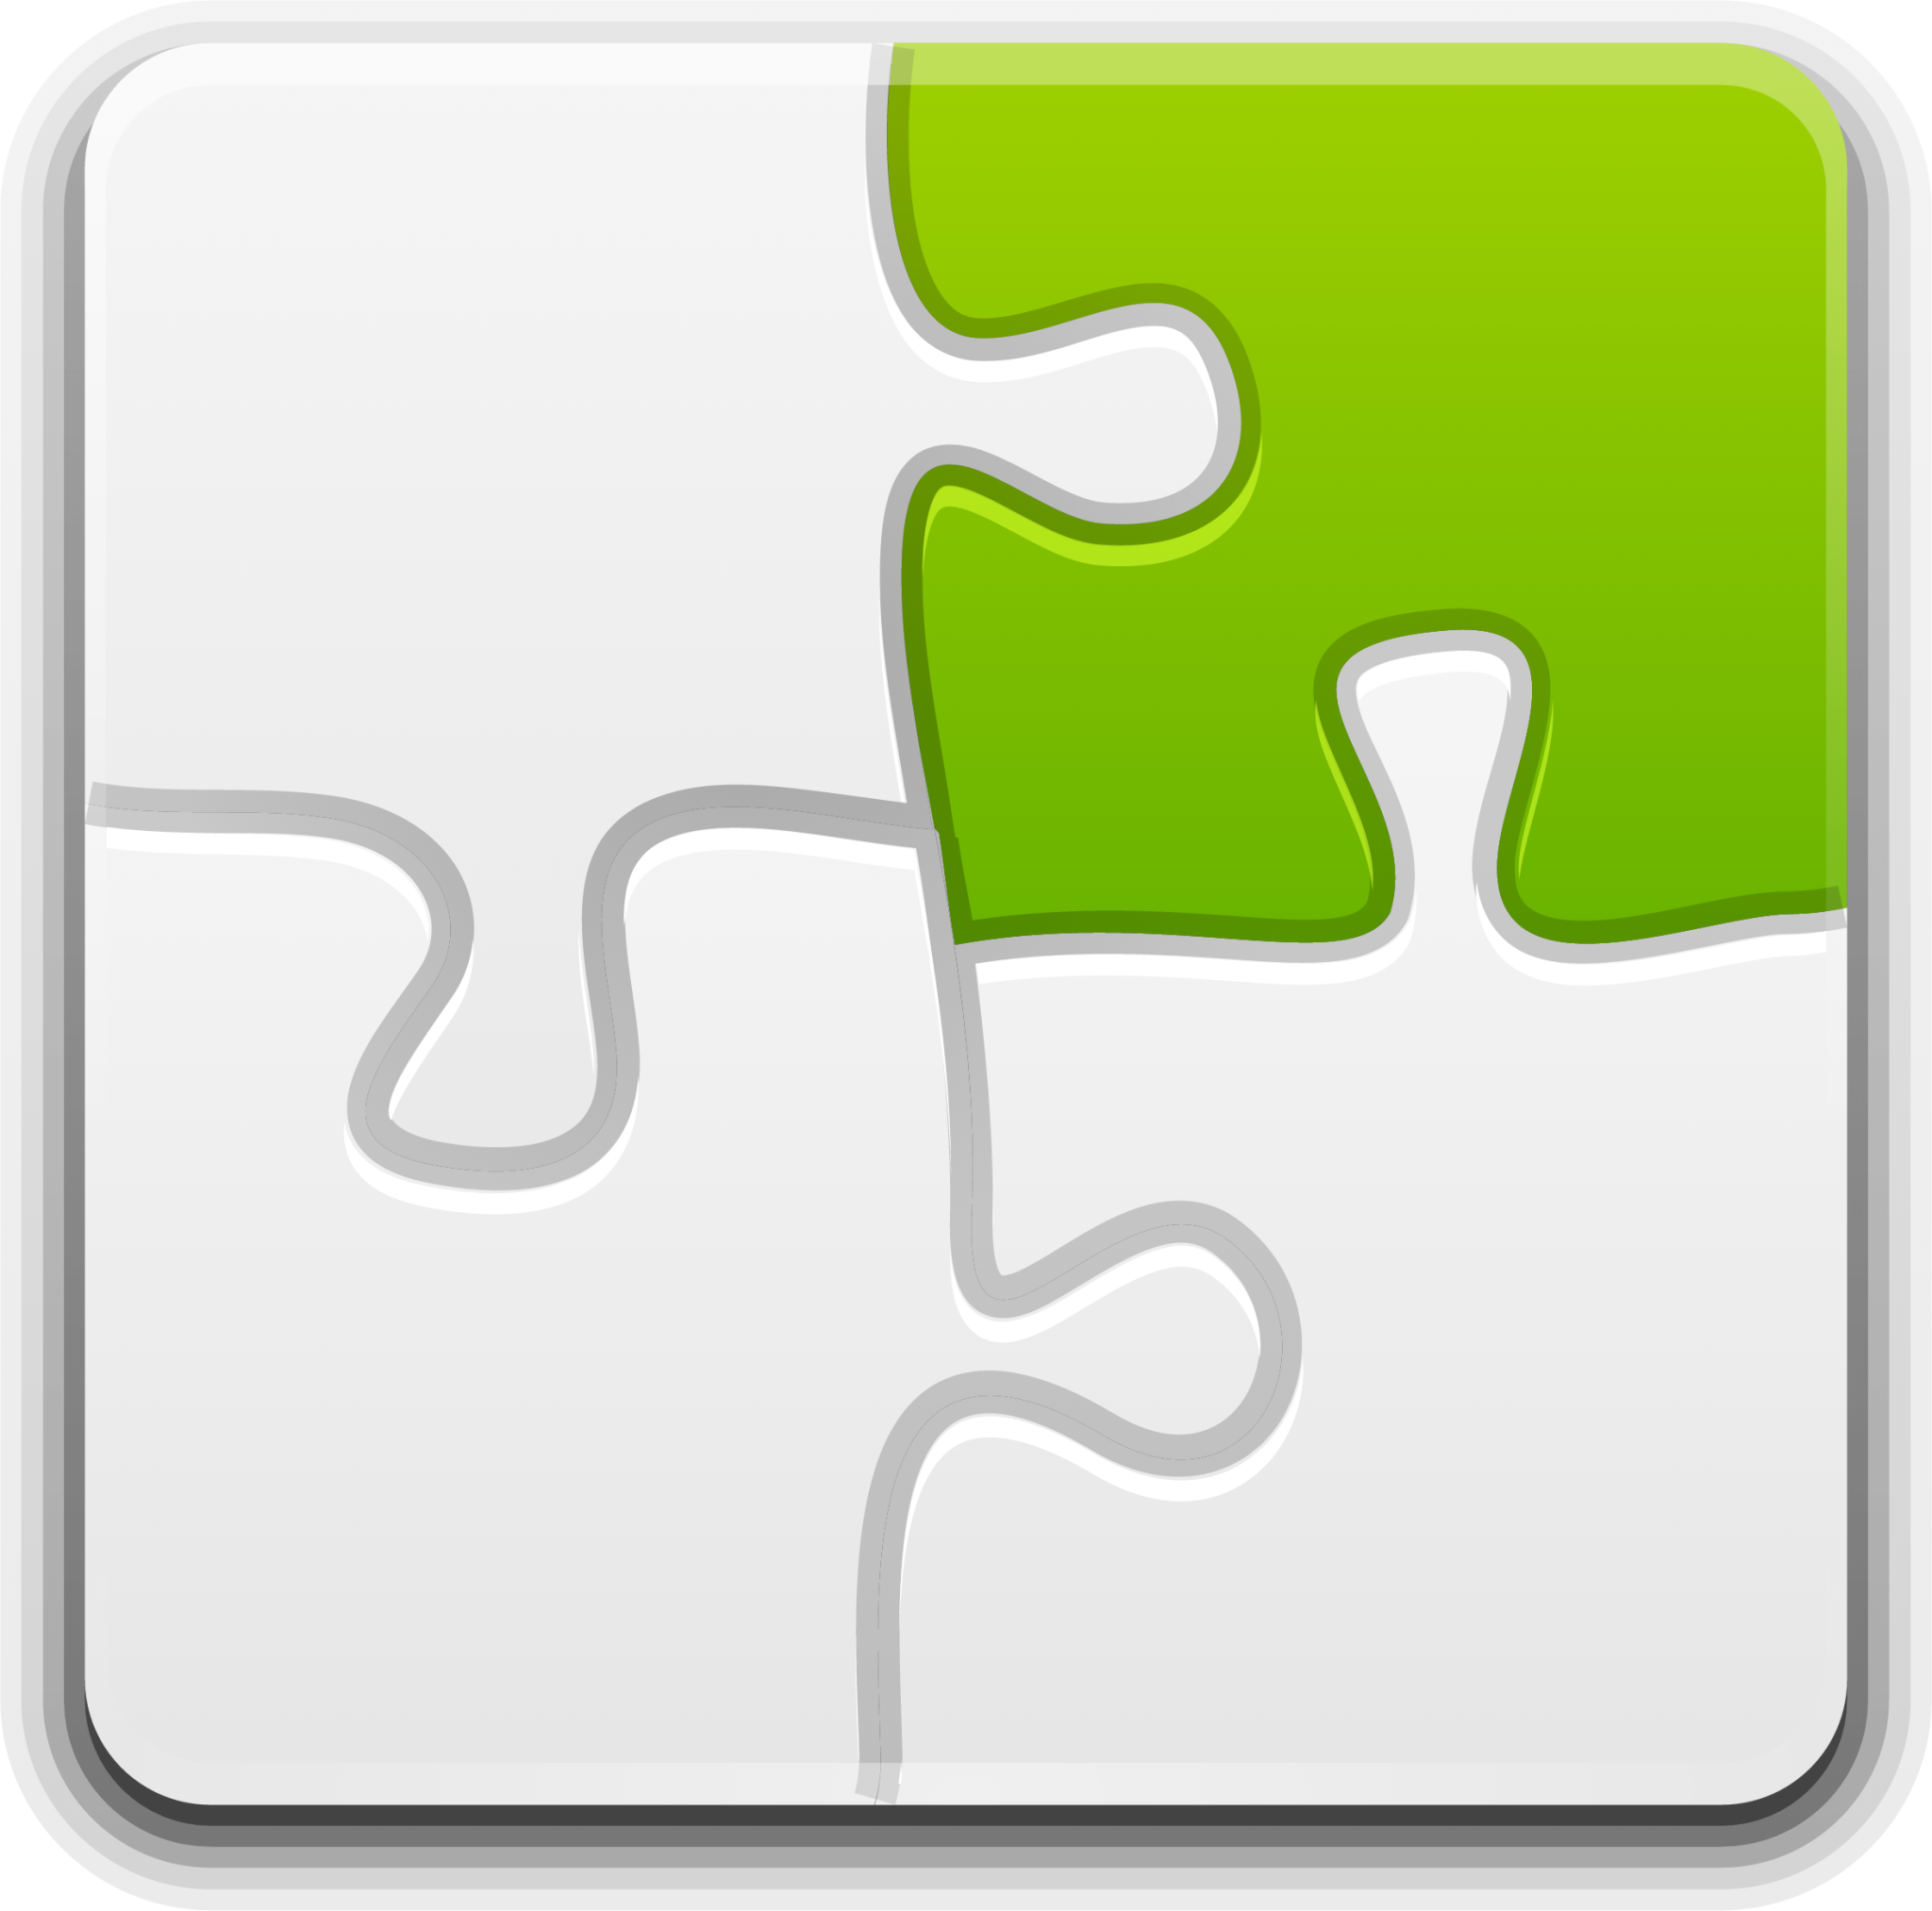 companion cube Icon - Download for free – Iconduck